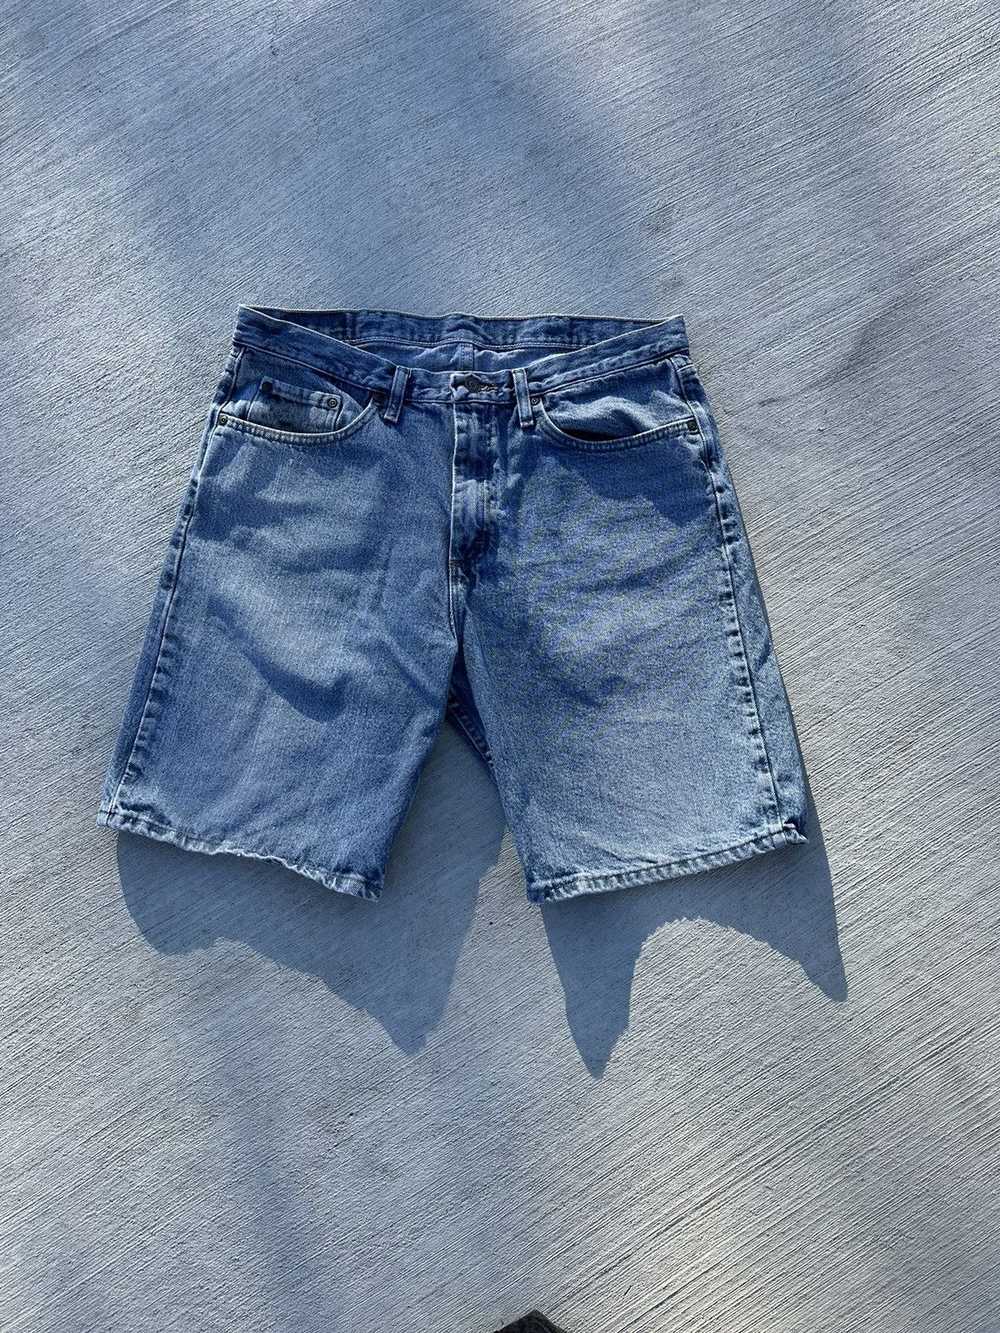 Wrangler Baggy jean shorts - image 2